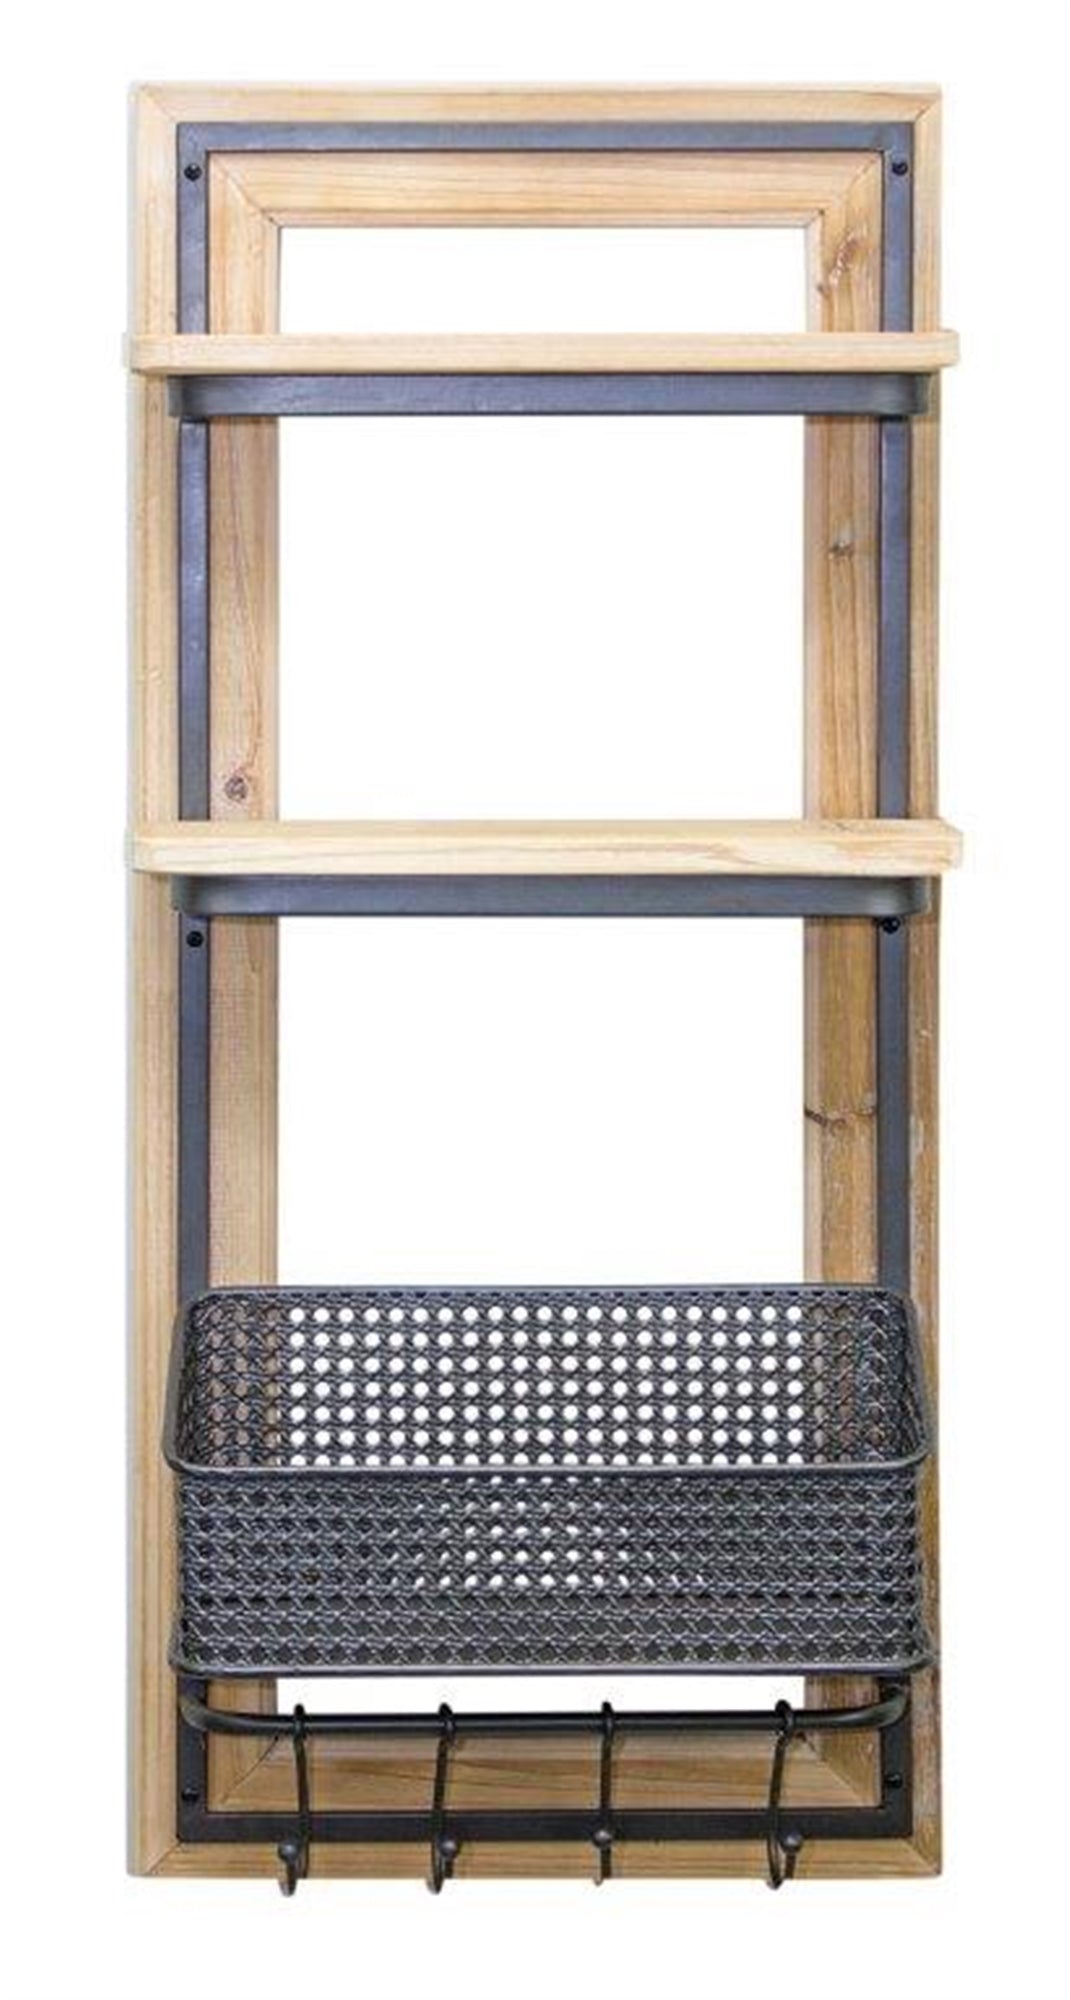 Wall Shelf with Basket 16.75"L x 35.75"H Wood/Metal